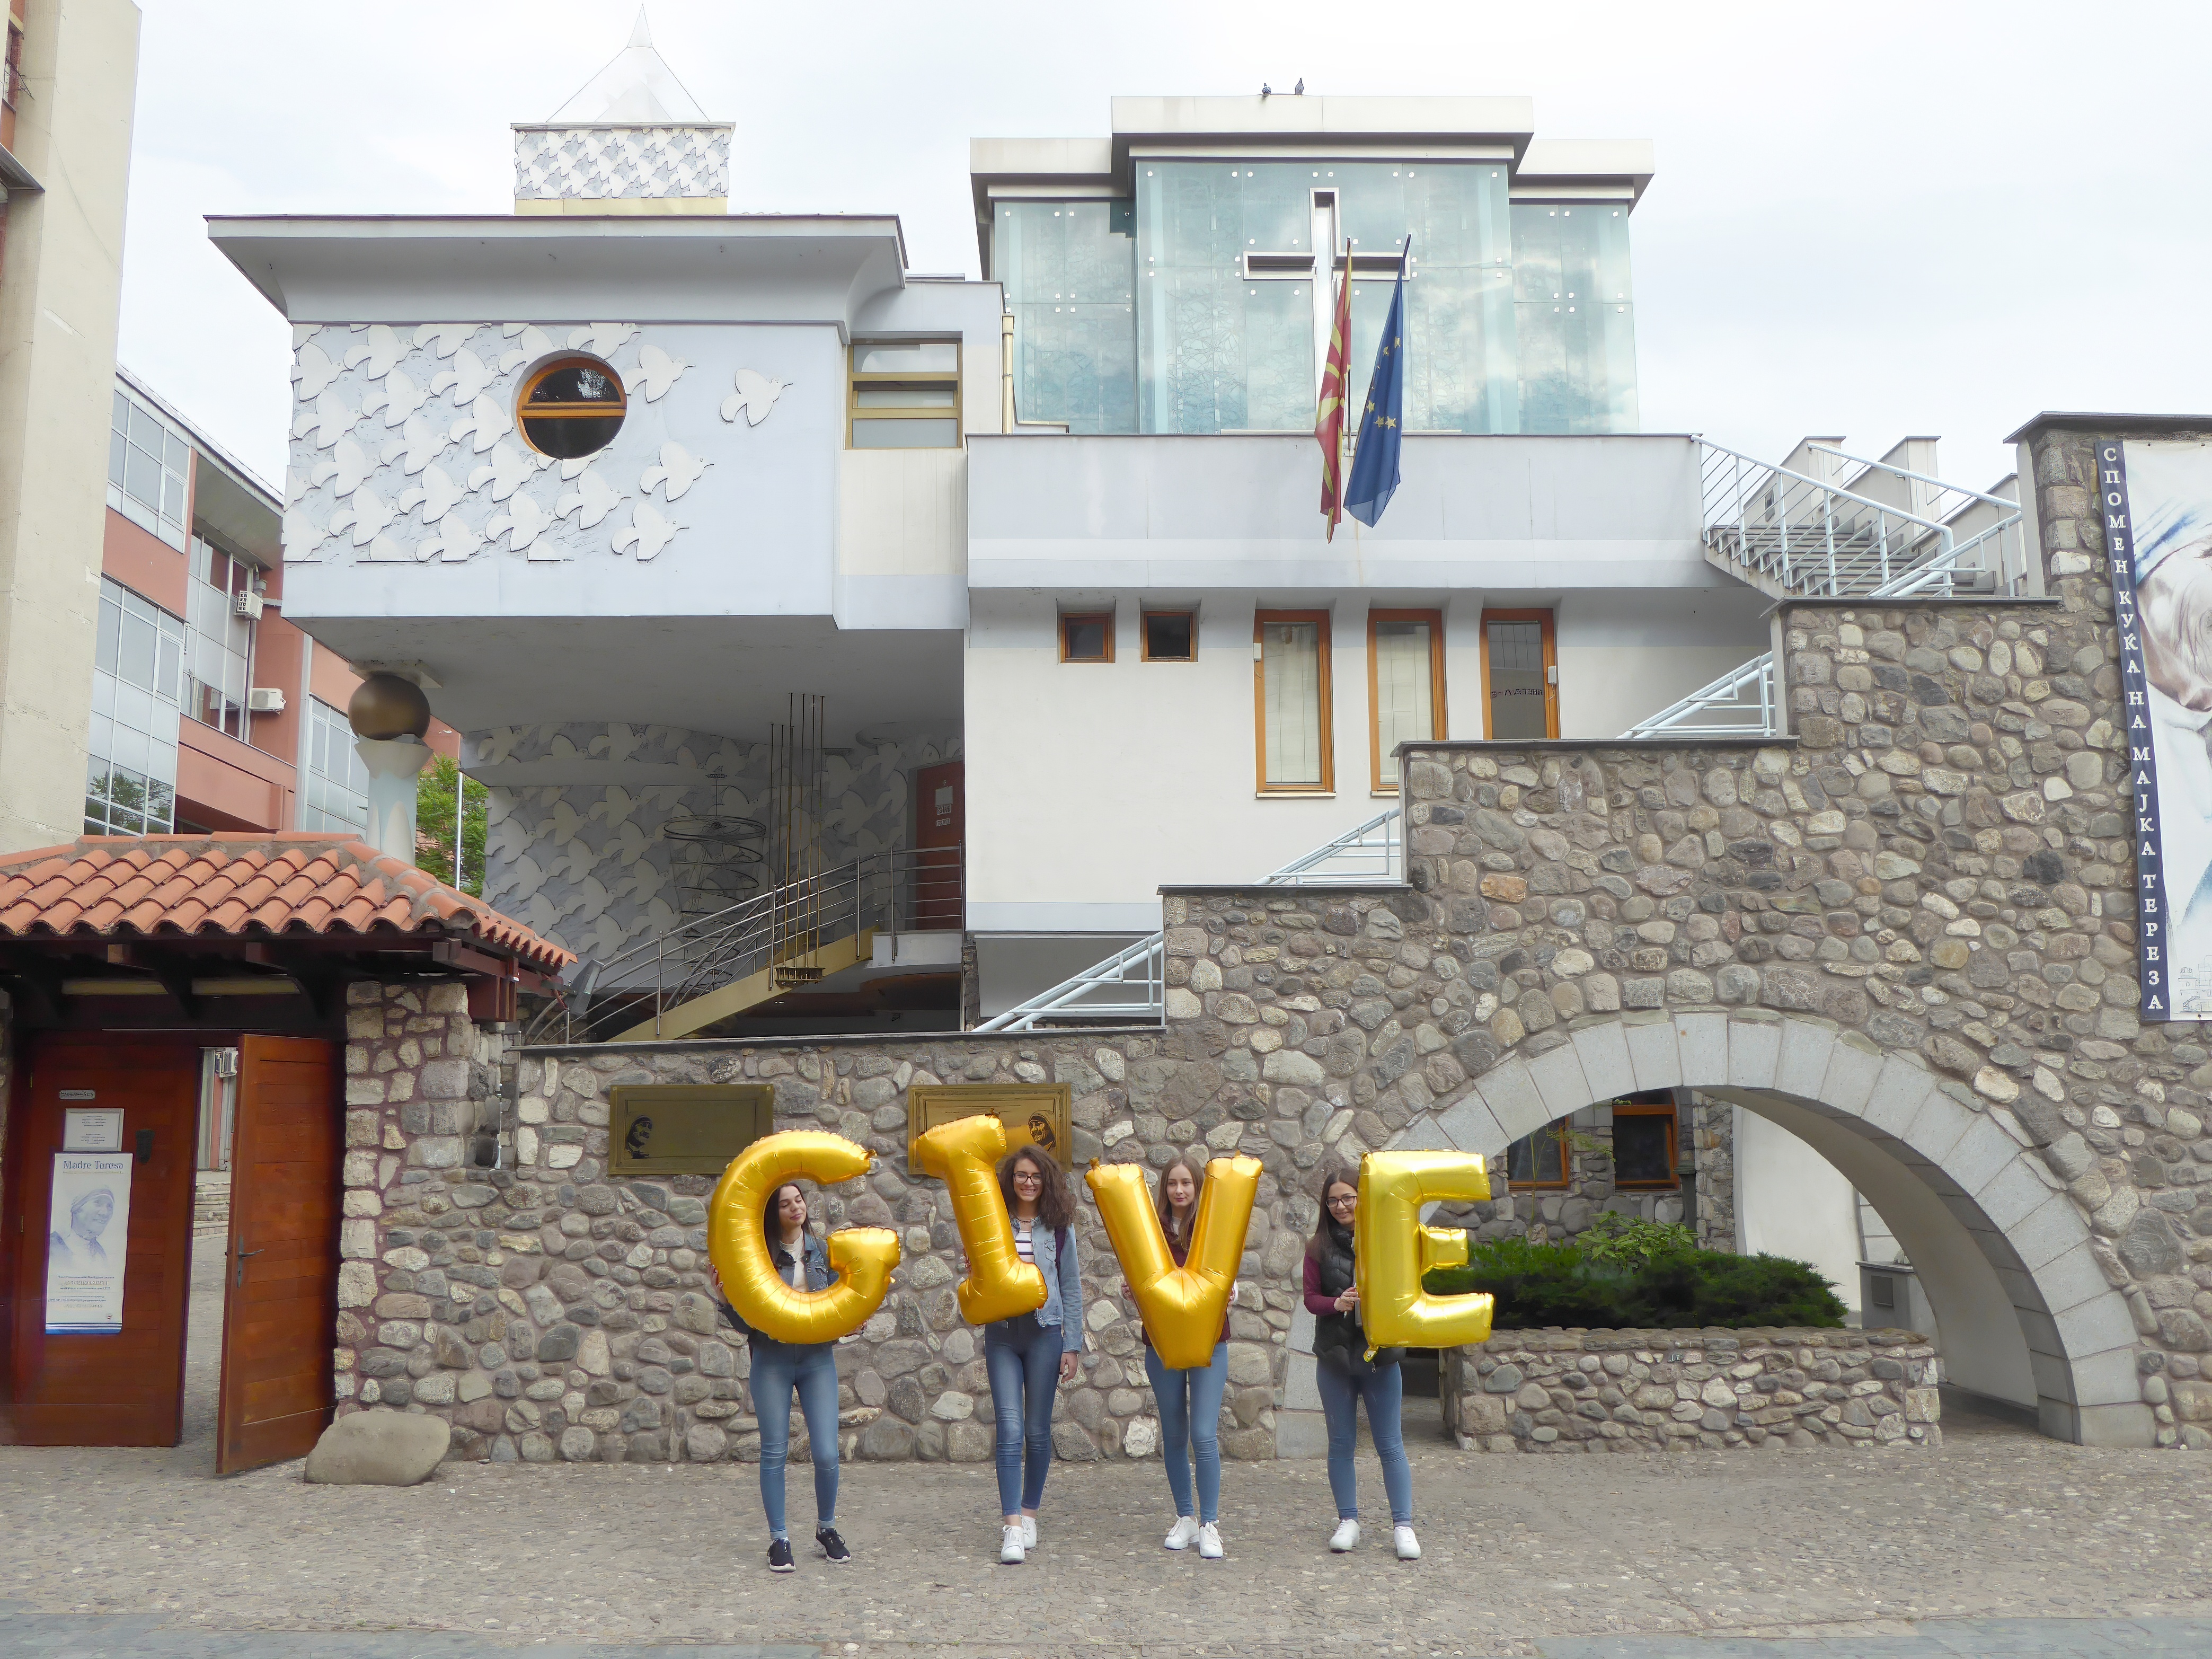 North Macedonia, Skopje, Memorial House of Mother Teresa (Shtëpia Përkujtimore e Nënë Terezës) - Give, Silence was Golden, gold balloos